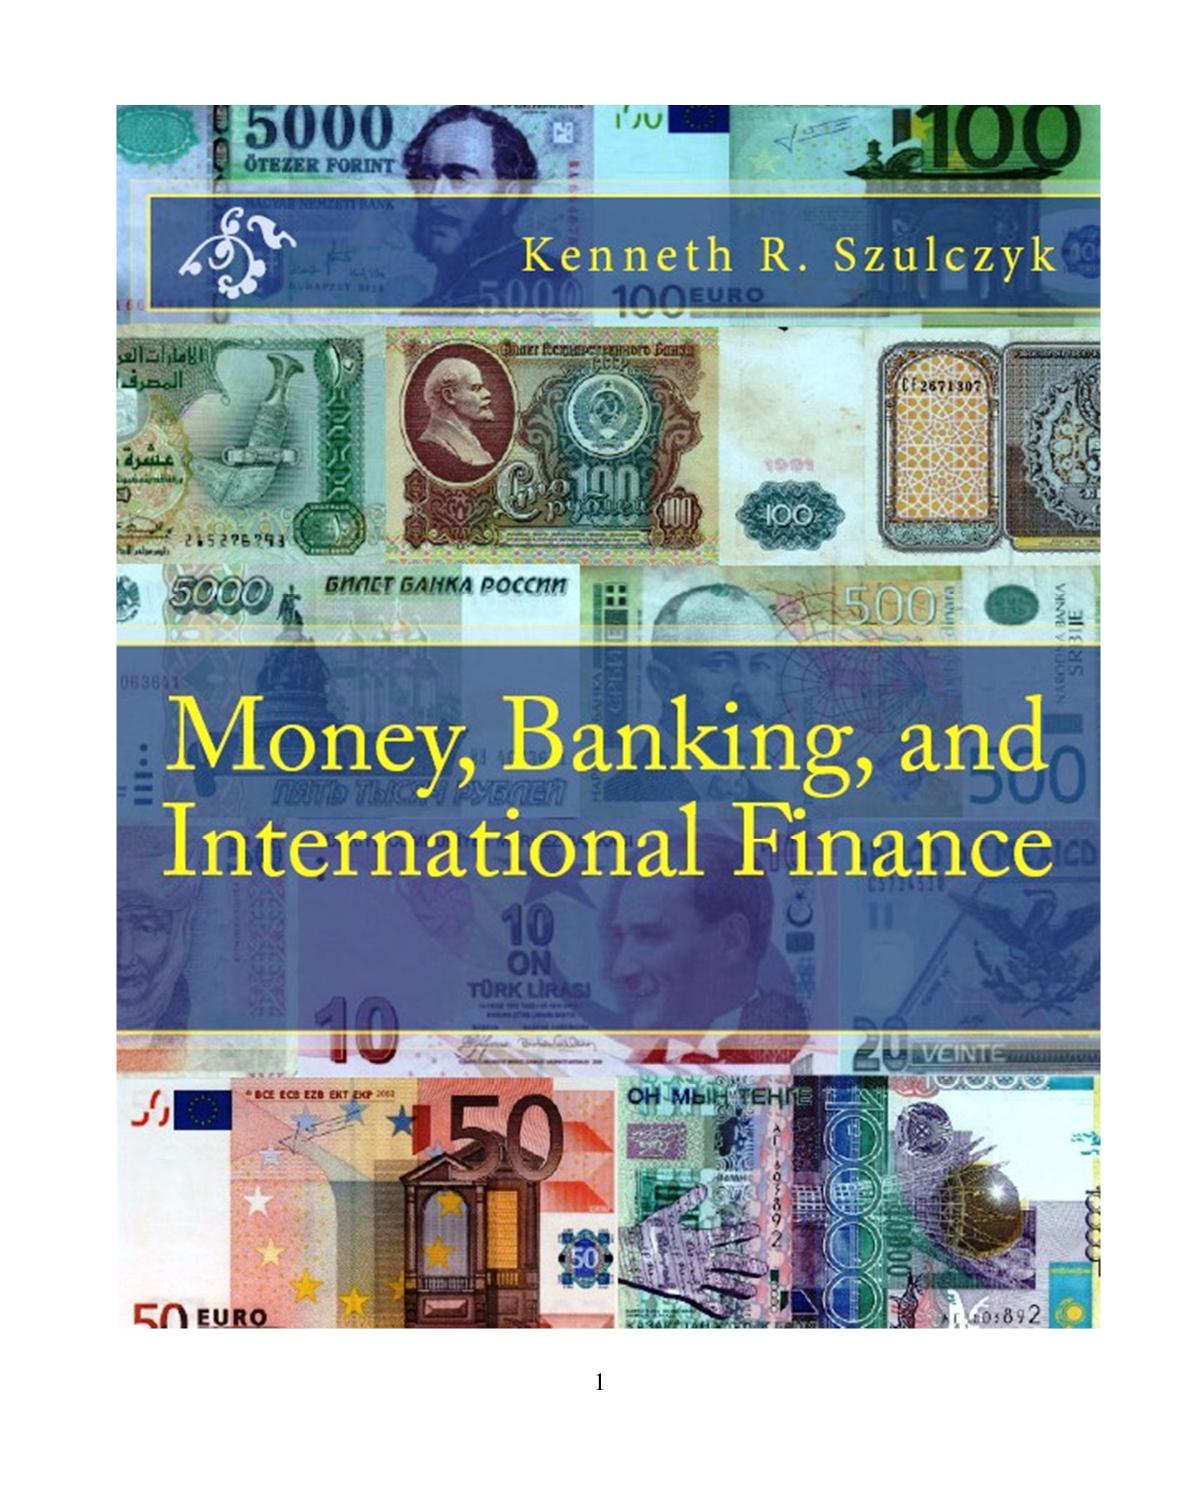 Microsoft Word - Money, Banking, and Int Finance(scribd).docx